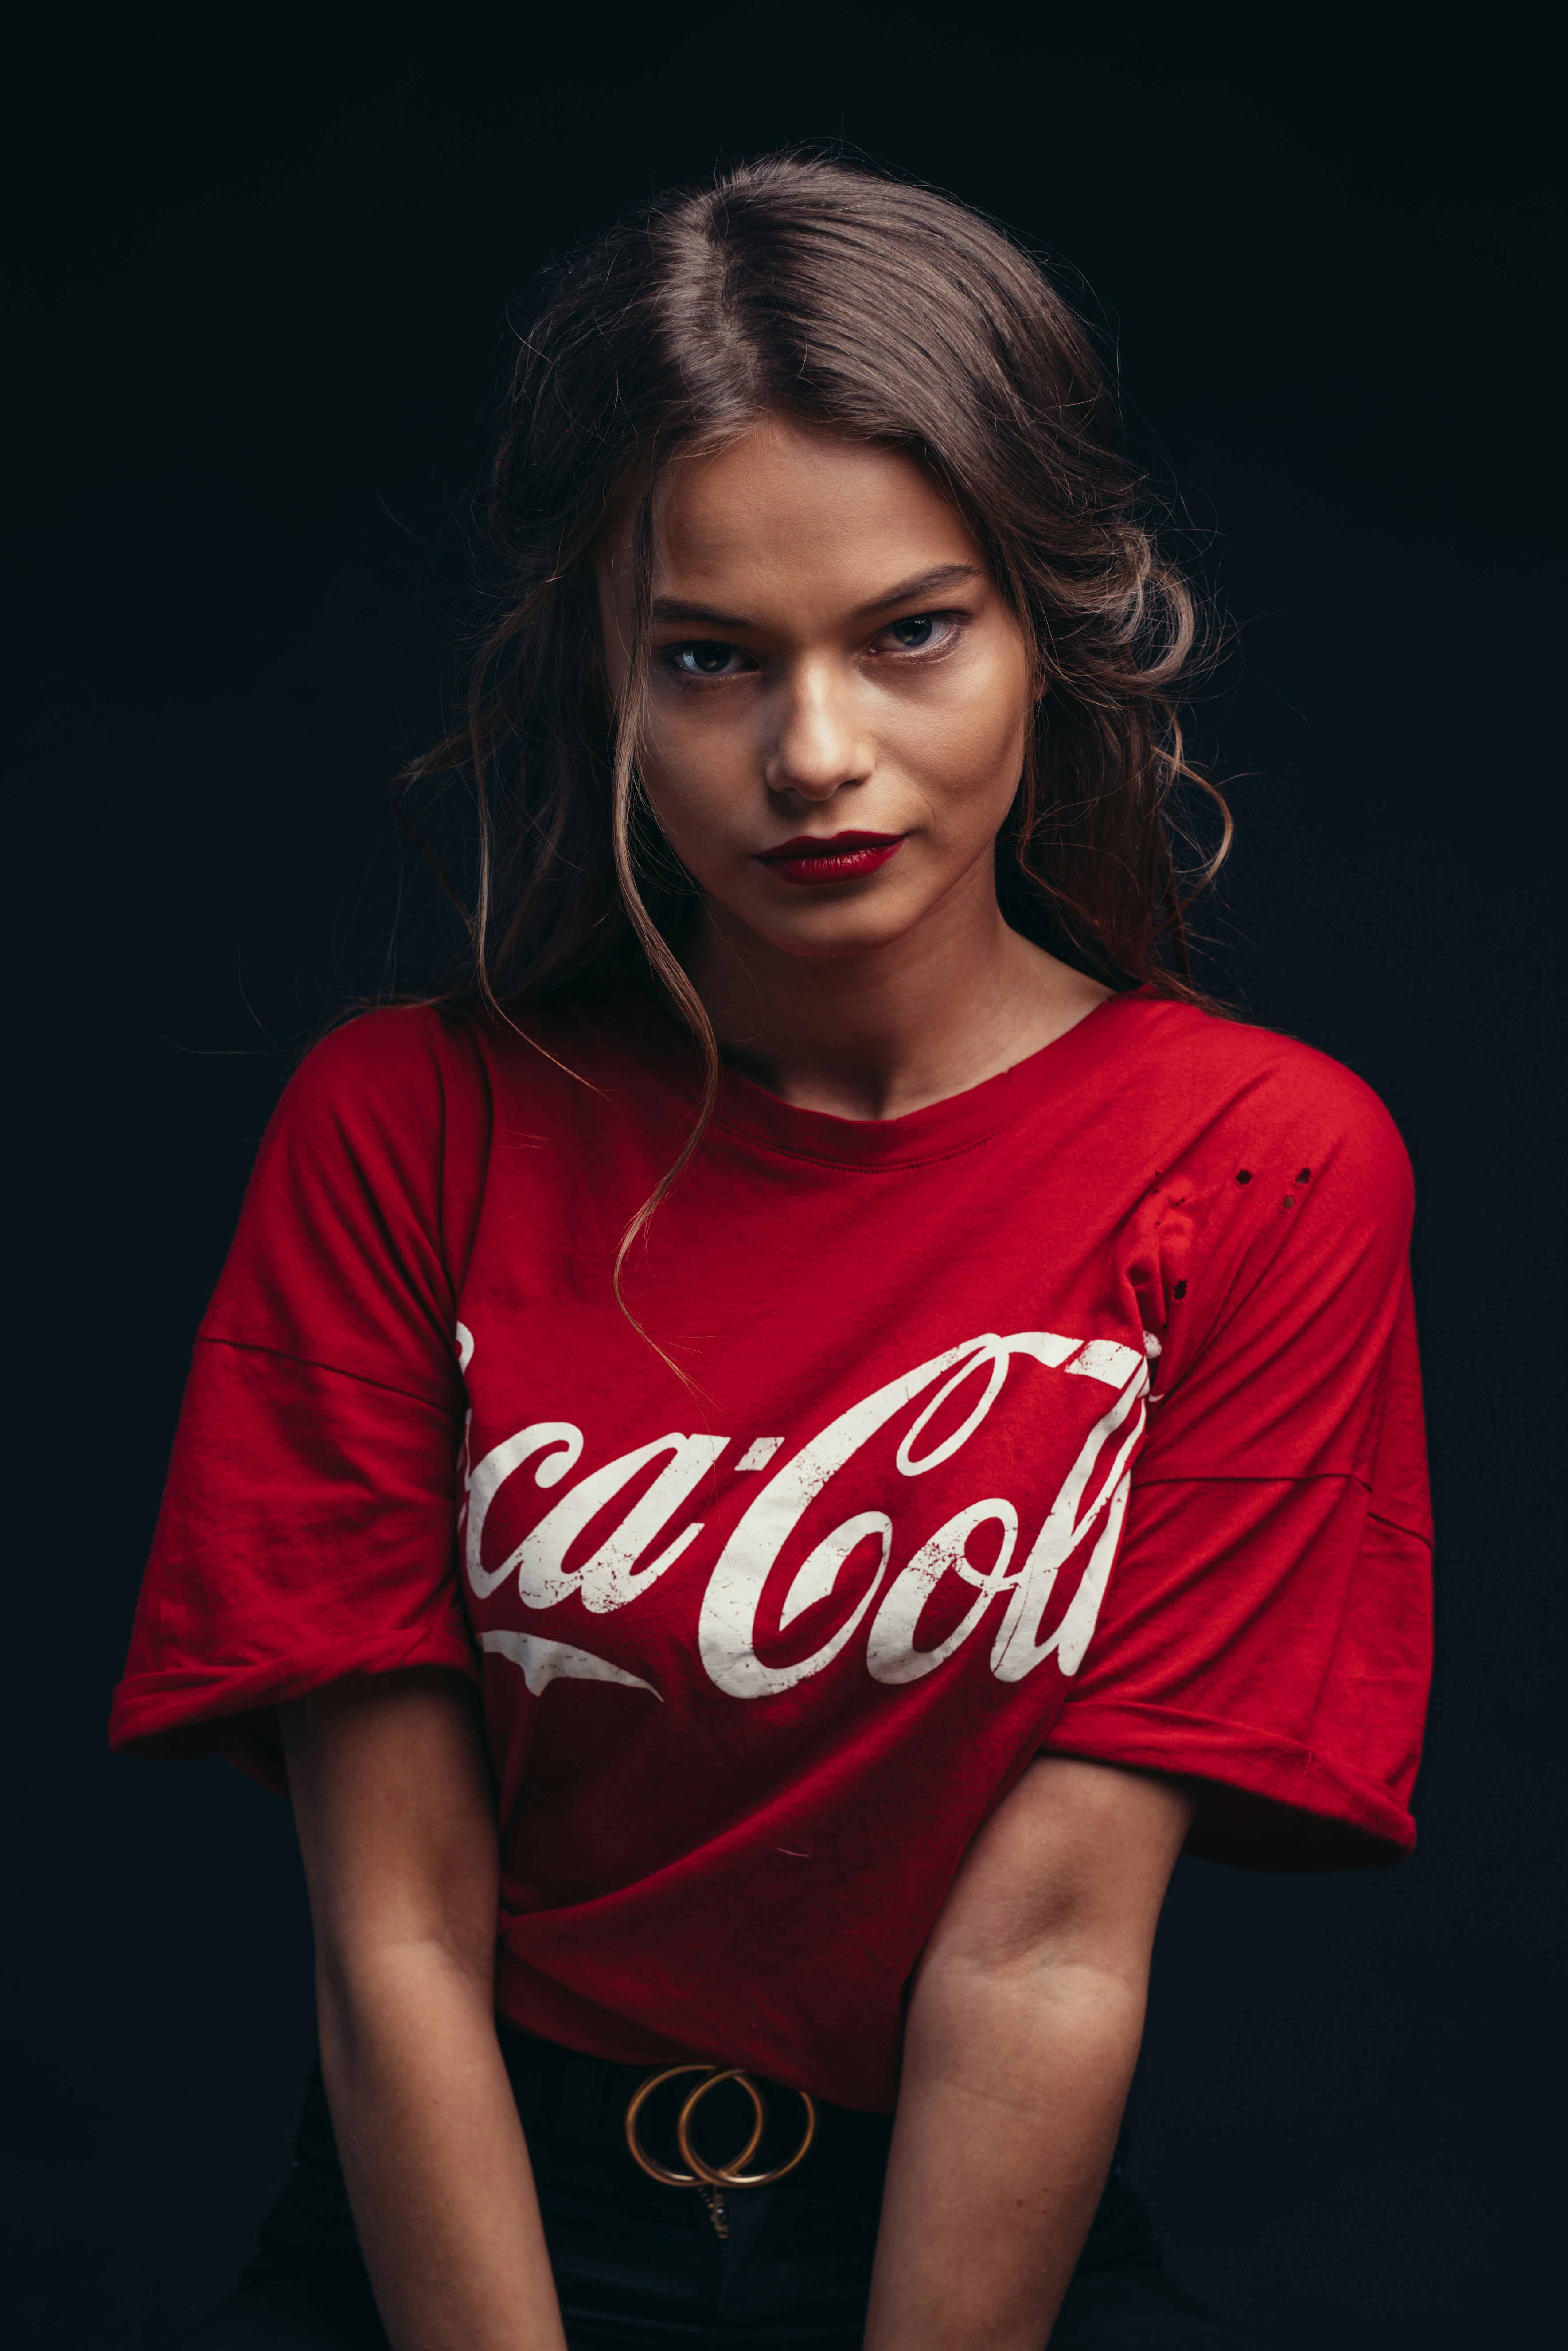 red coca cola t shirt